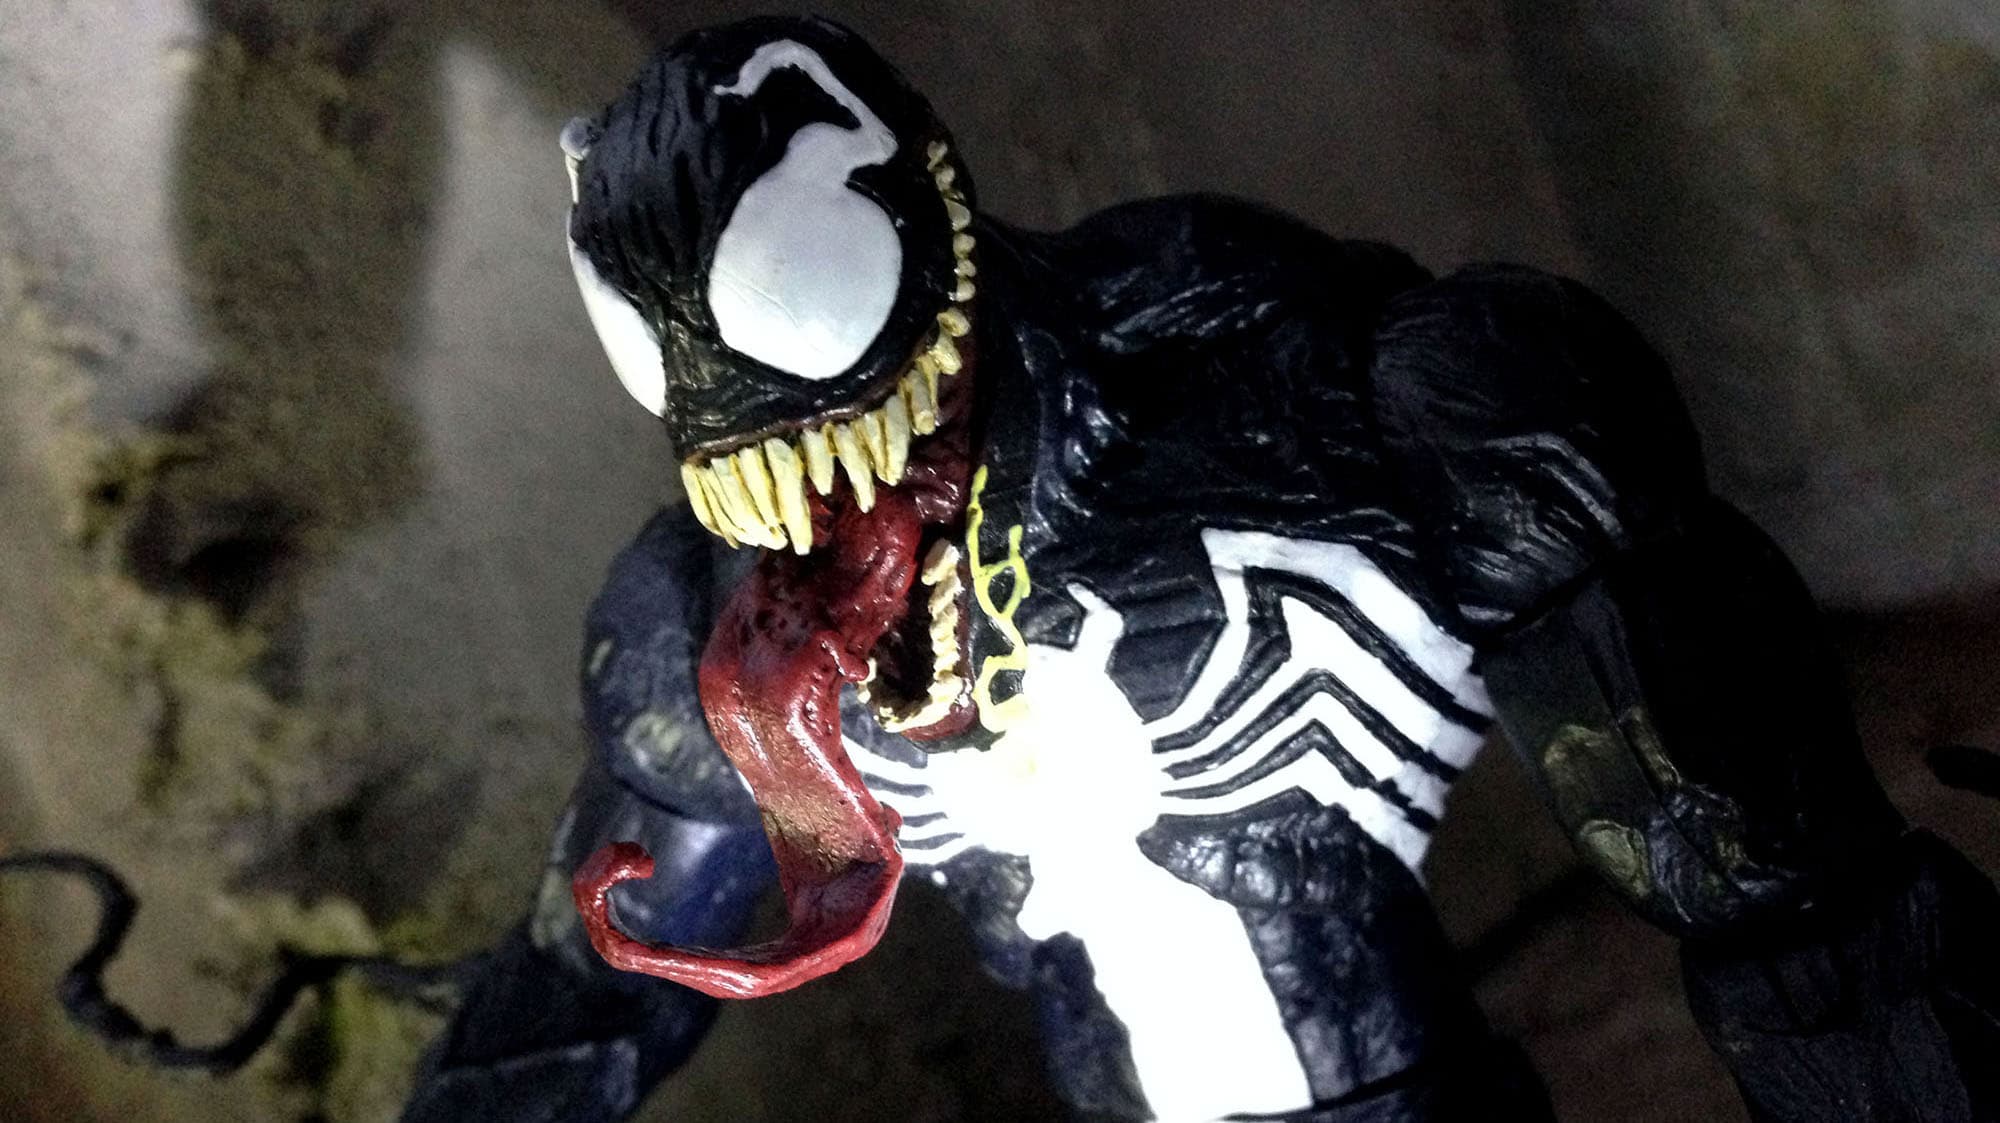 Marvel Select Venom action figure